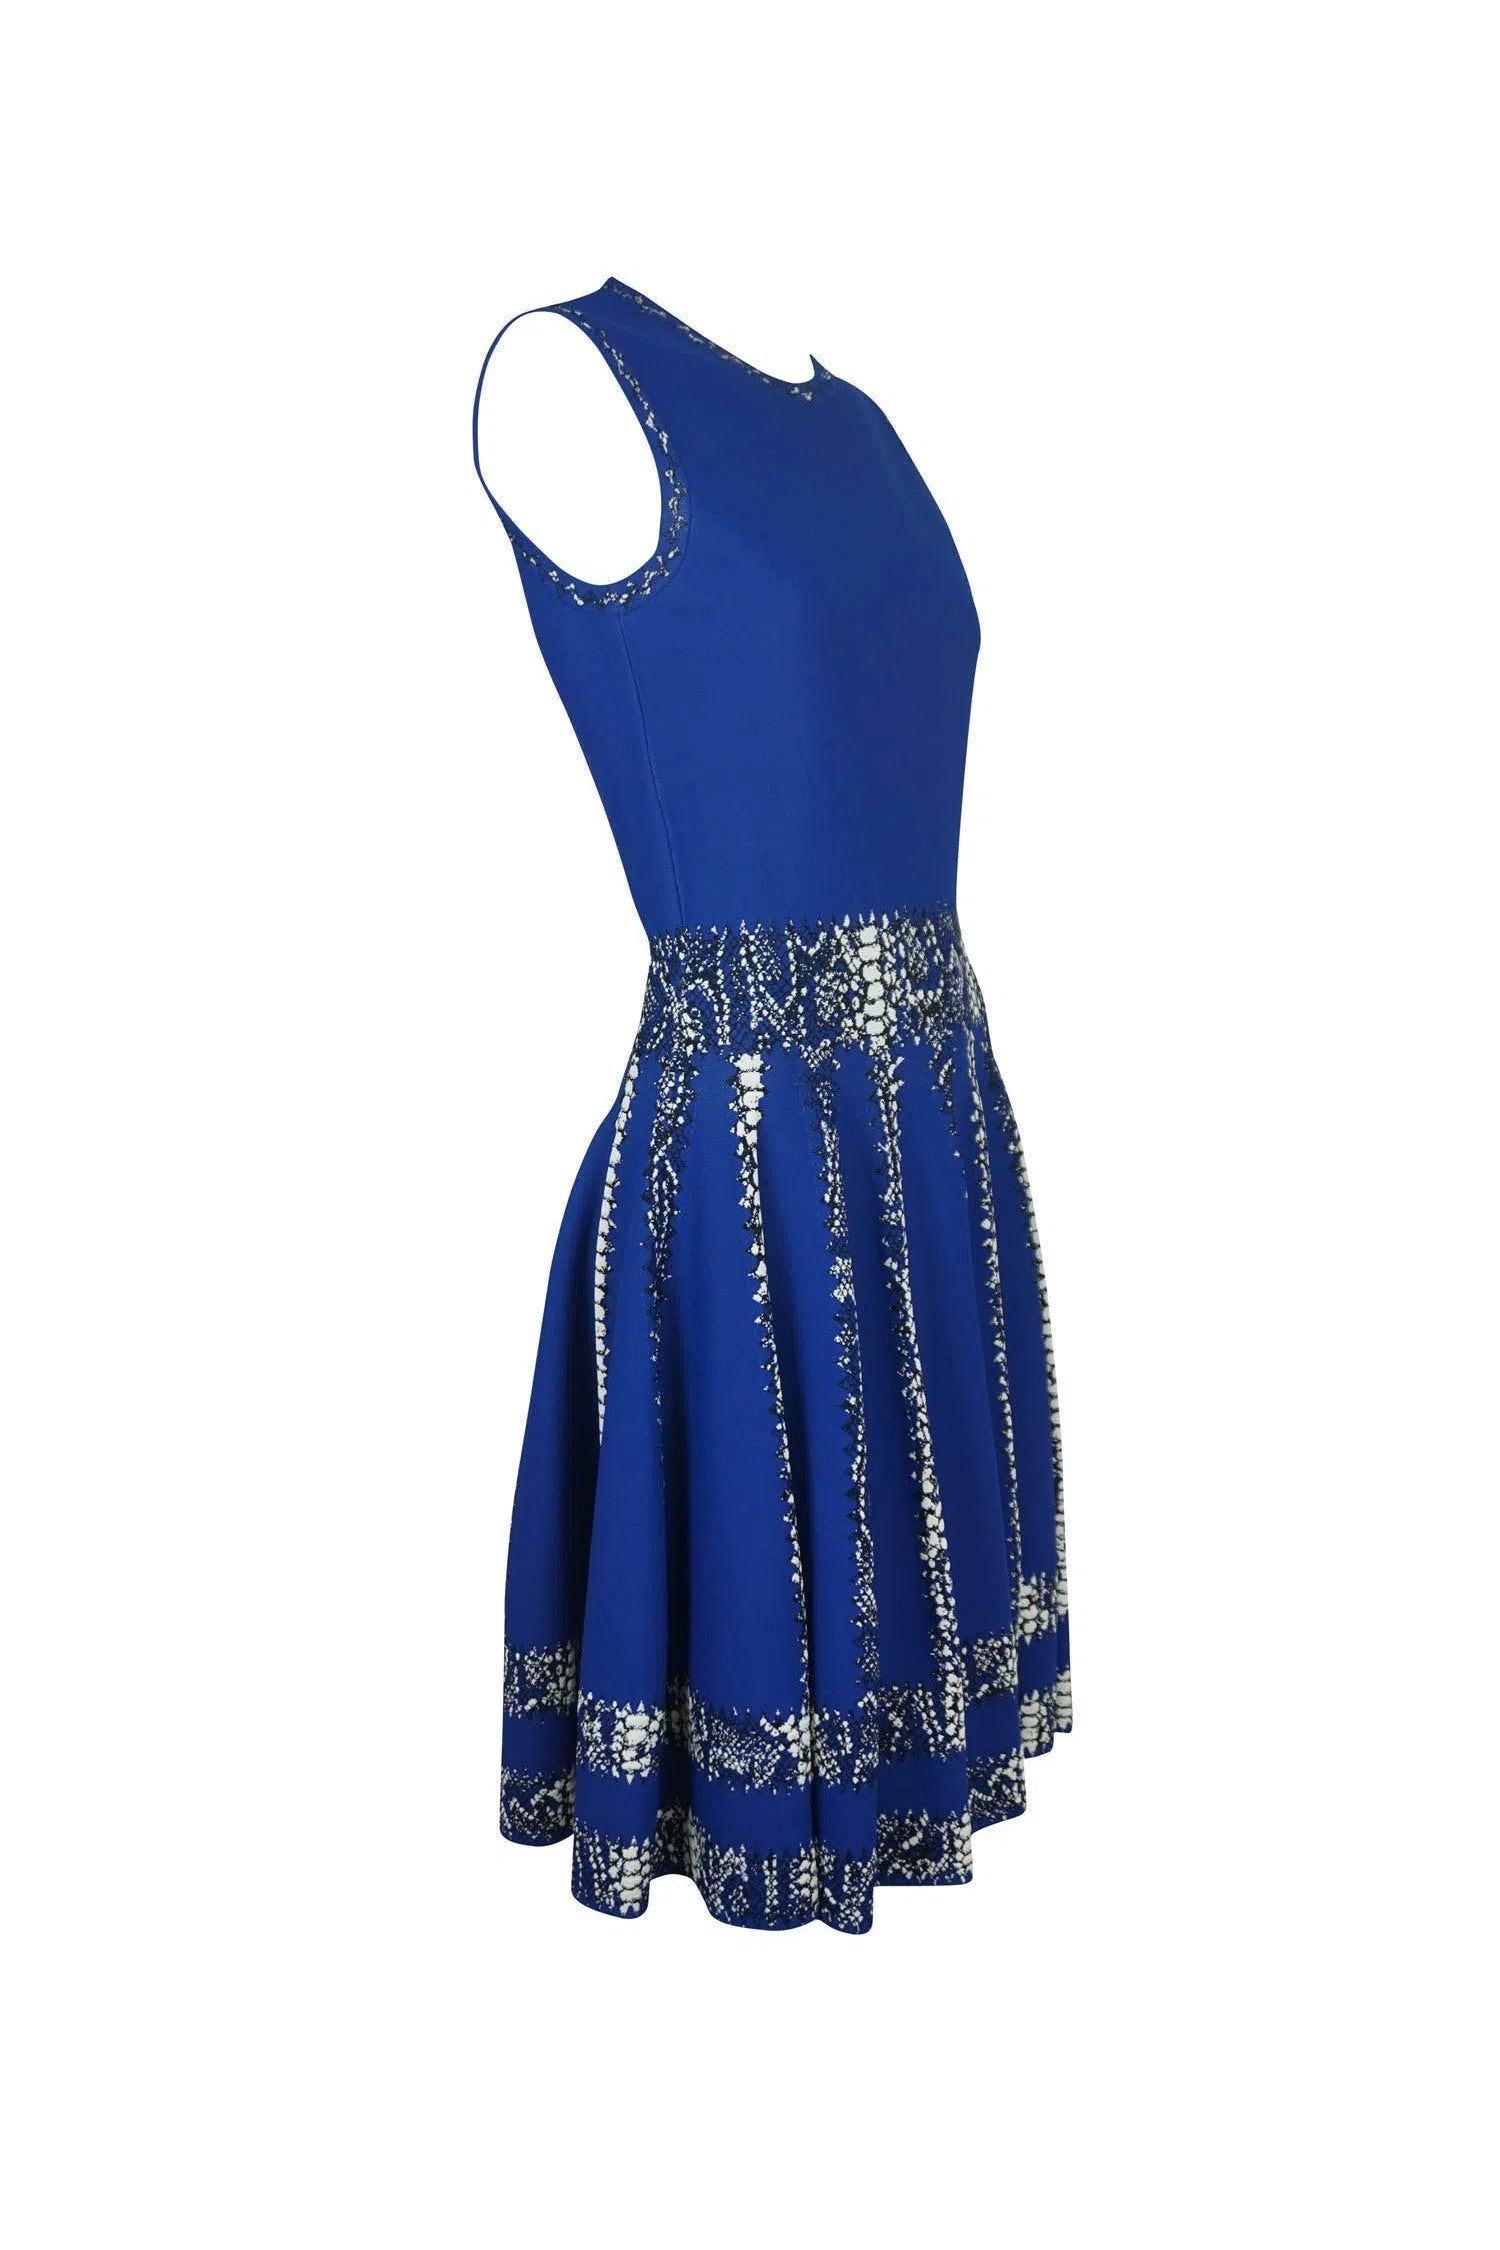 Alexander McQueen Blue Fit Flare Dress Resort 2015